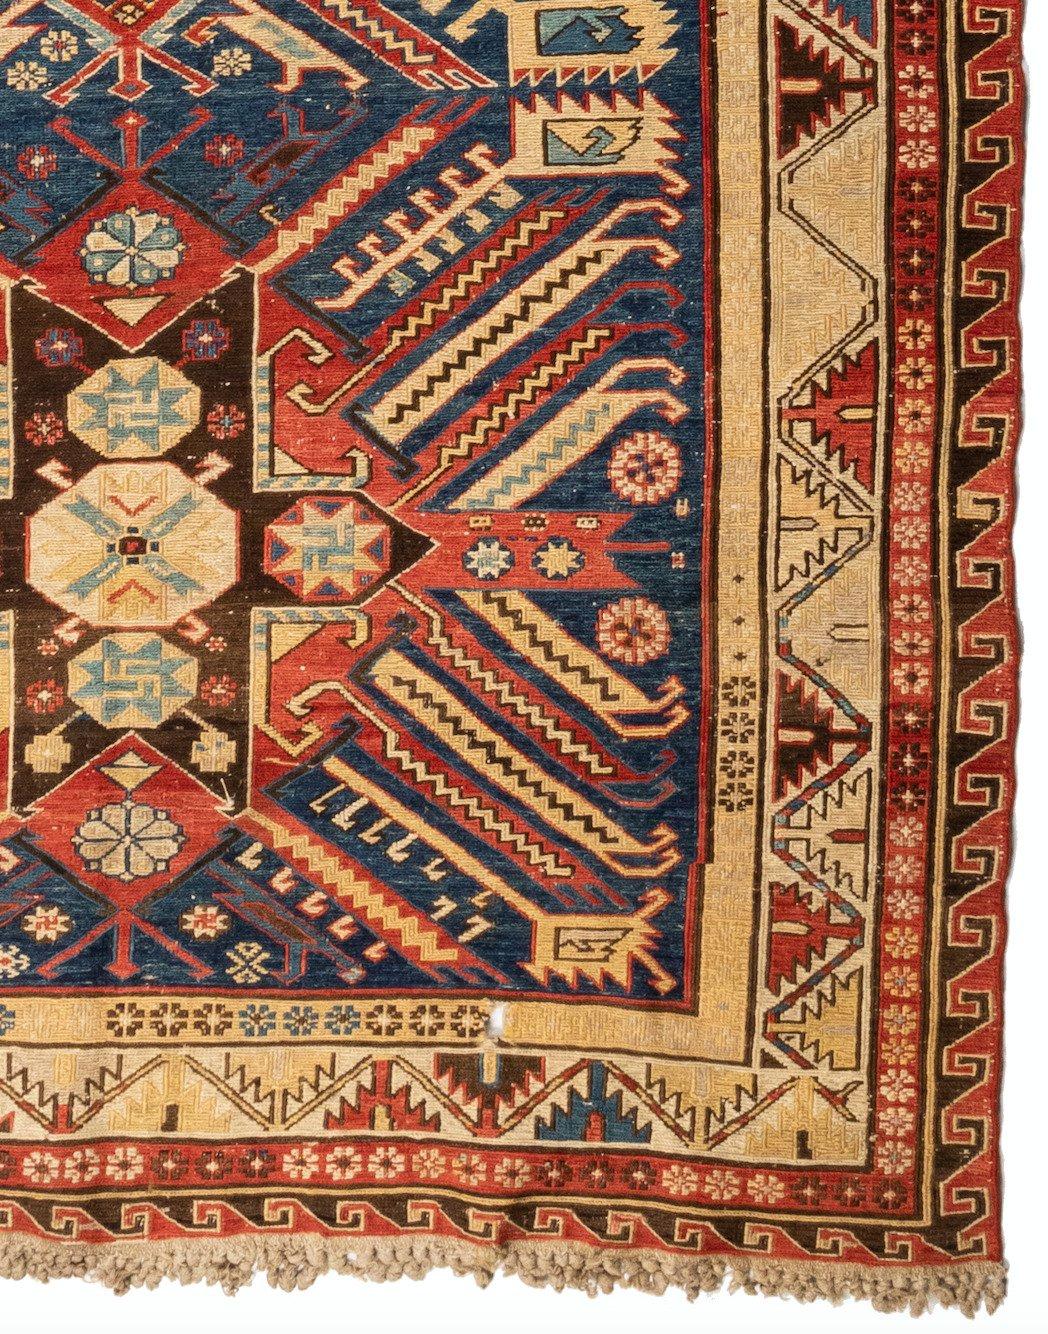 Sumak Late 19th C Antique Caucasian Red Blue Gold Tribal Soumak Rug For Sale